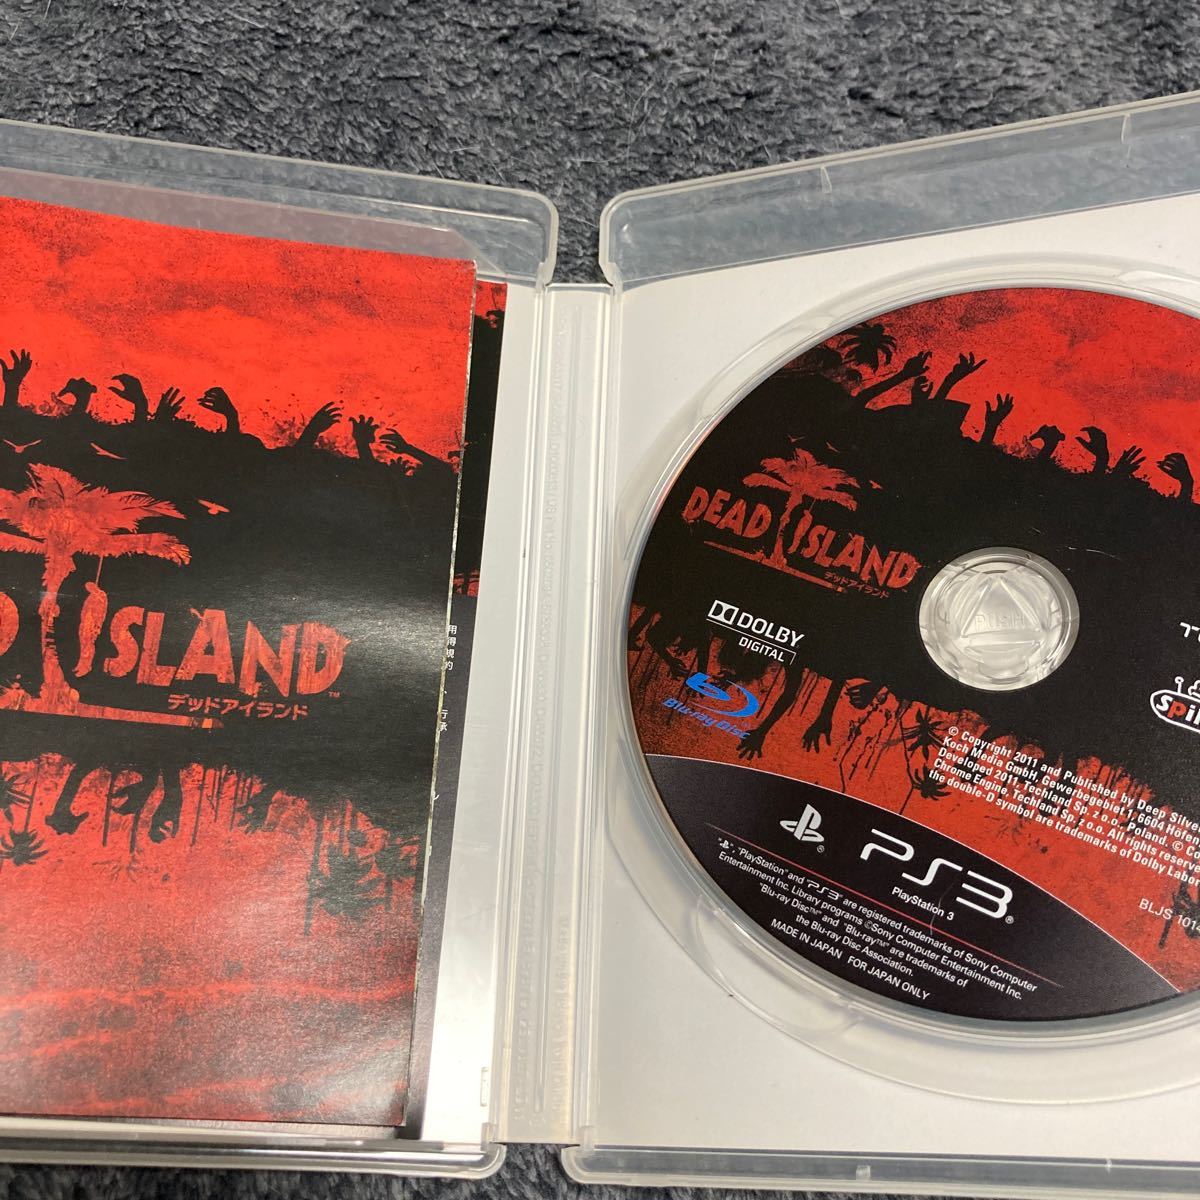 【PS3】 DEAD ISLAND [通常版］